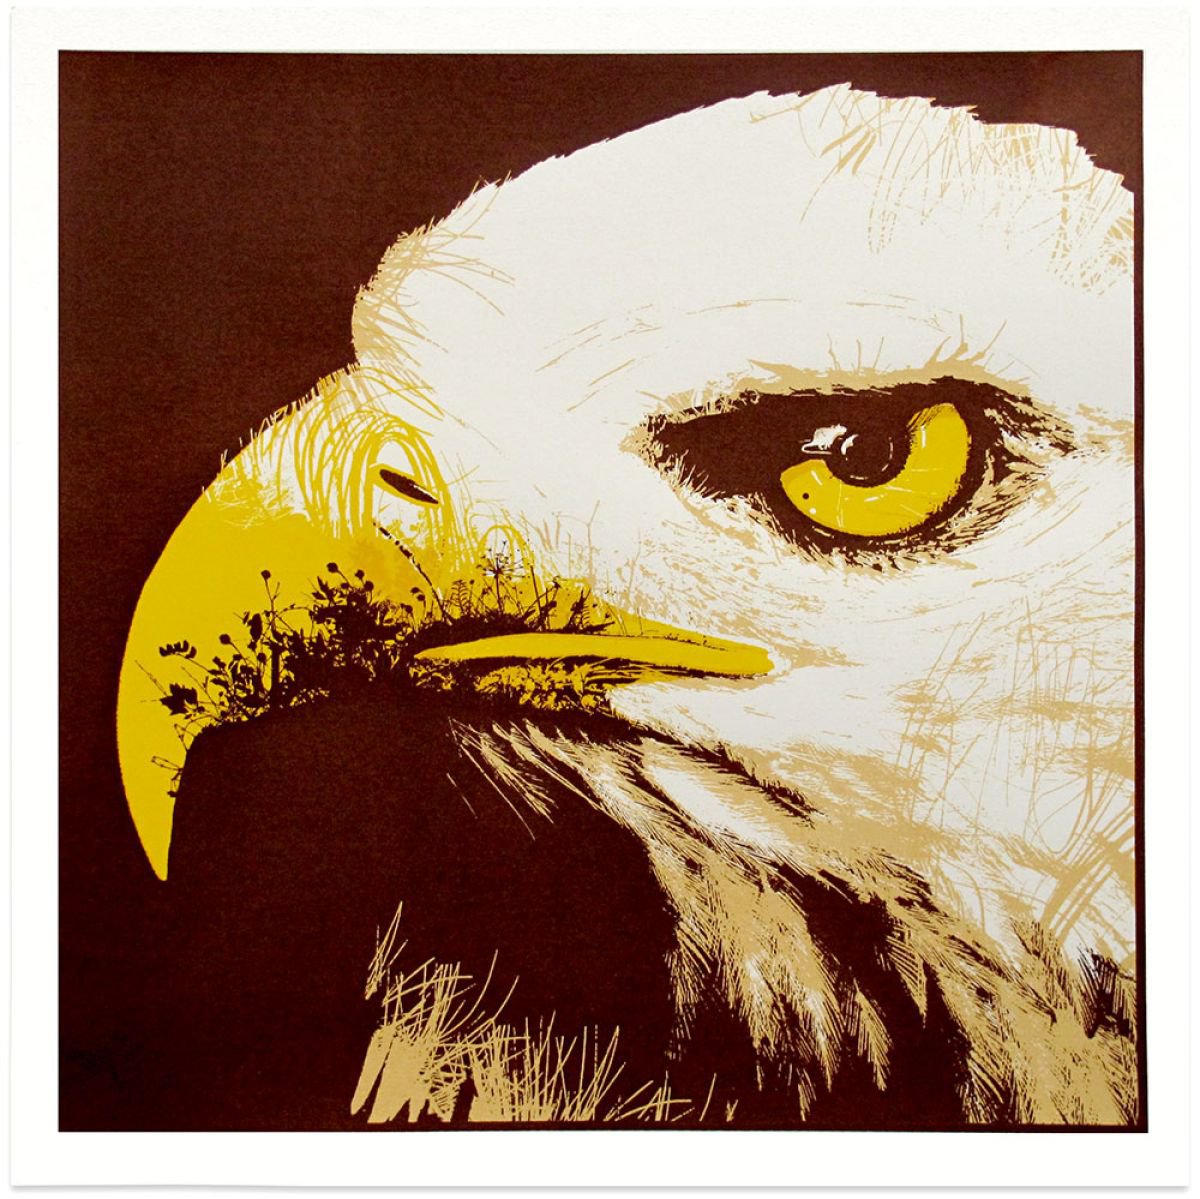 Golden Eagle (Art of Stalking set) by Chris Keegan